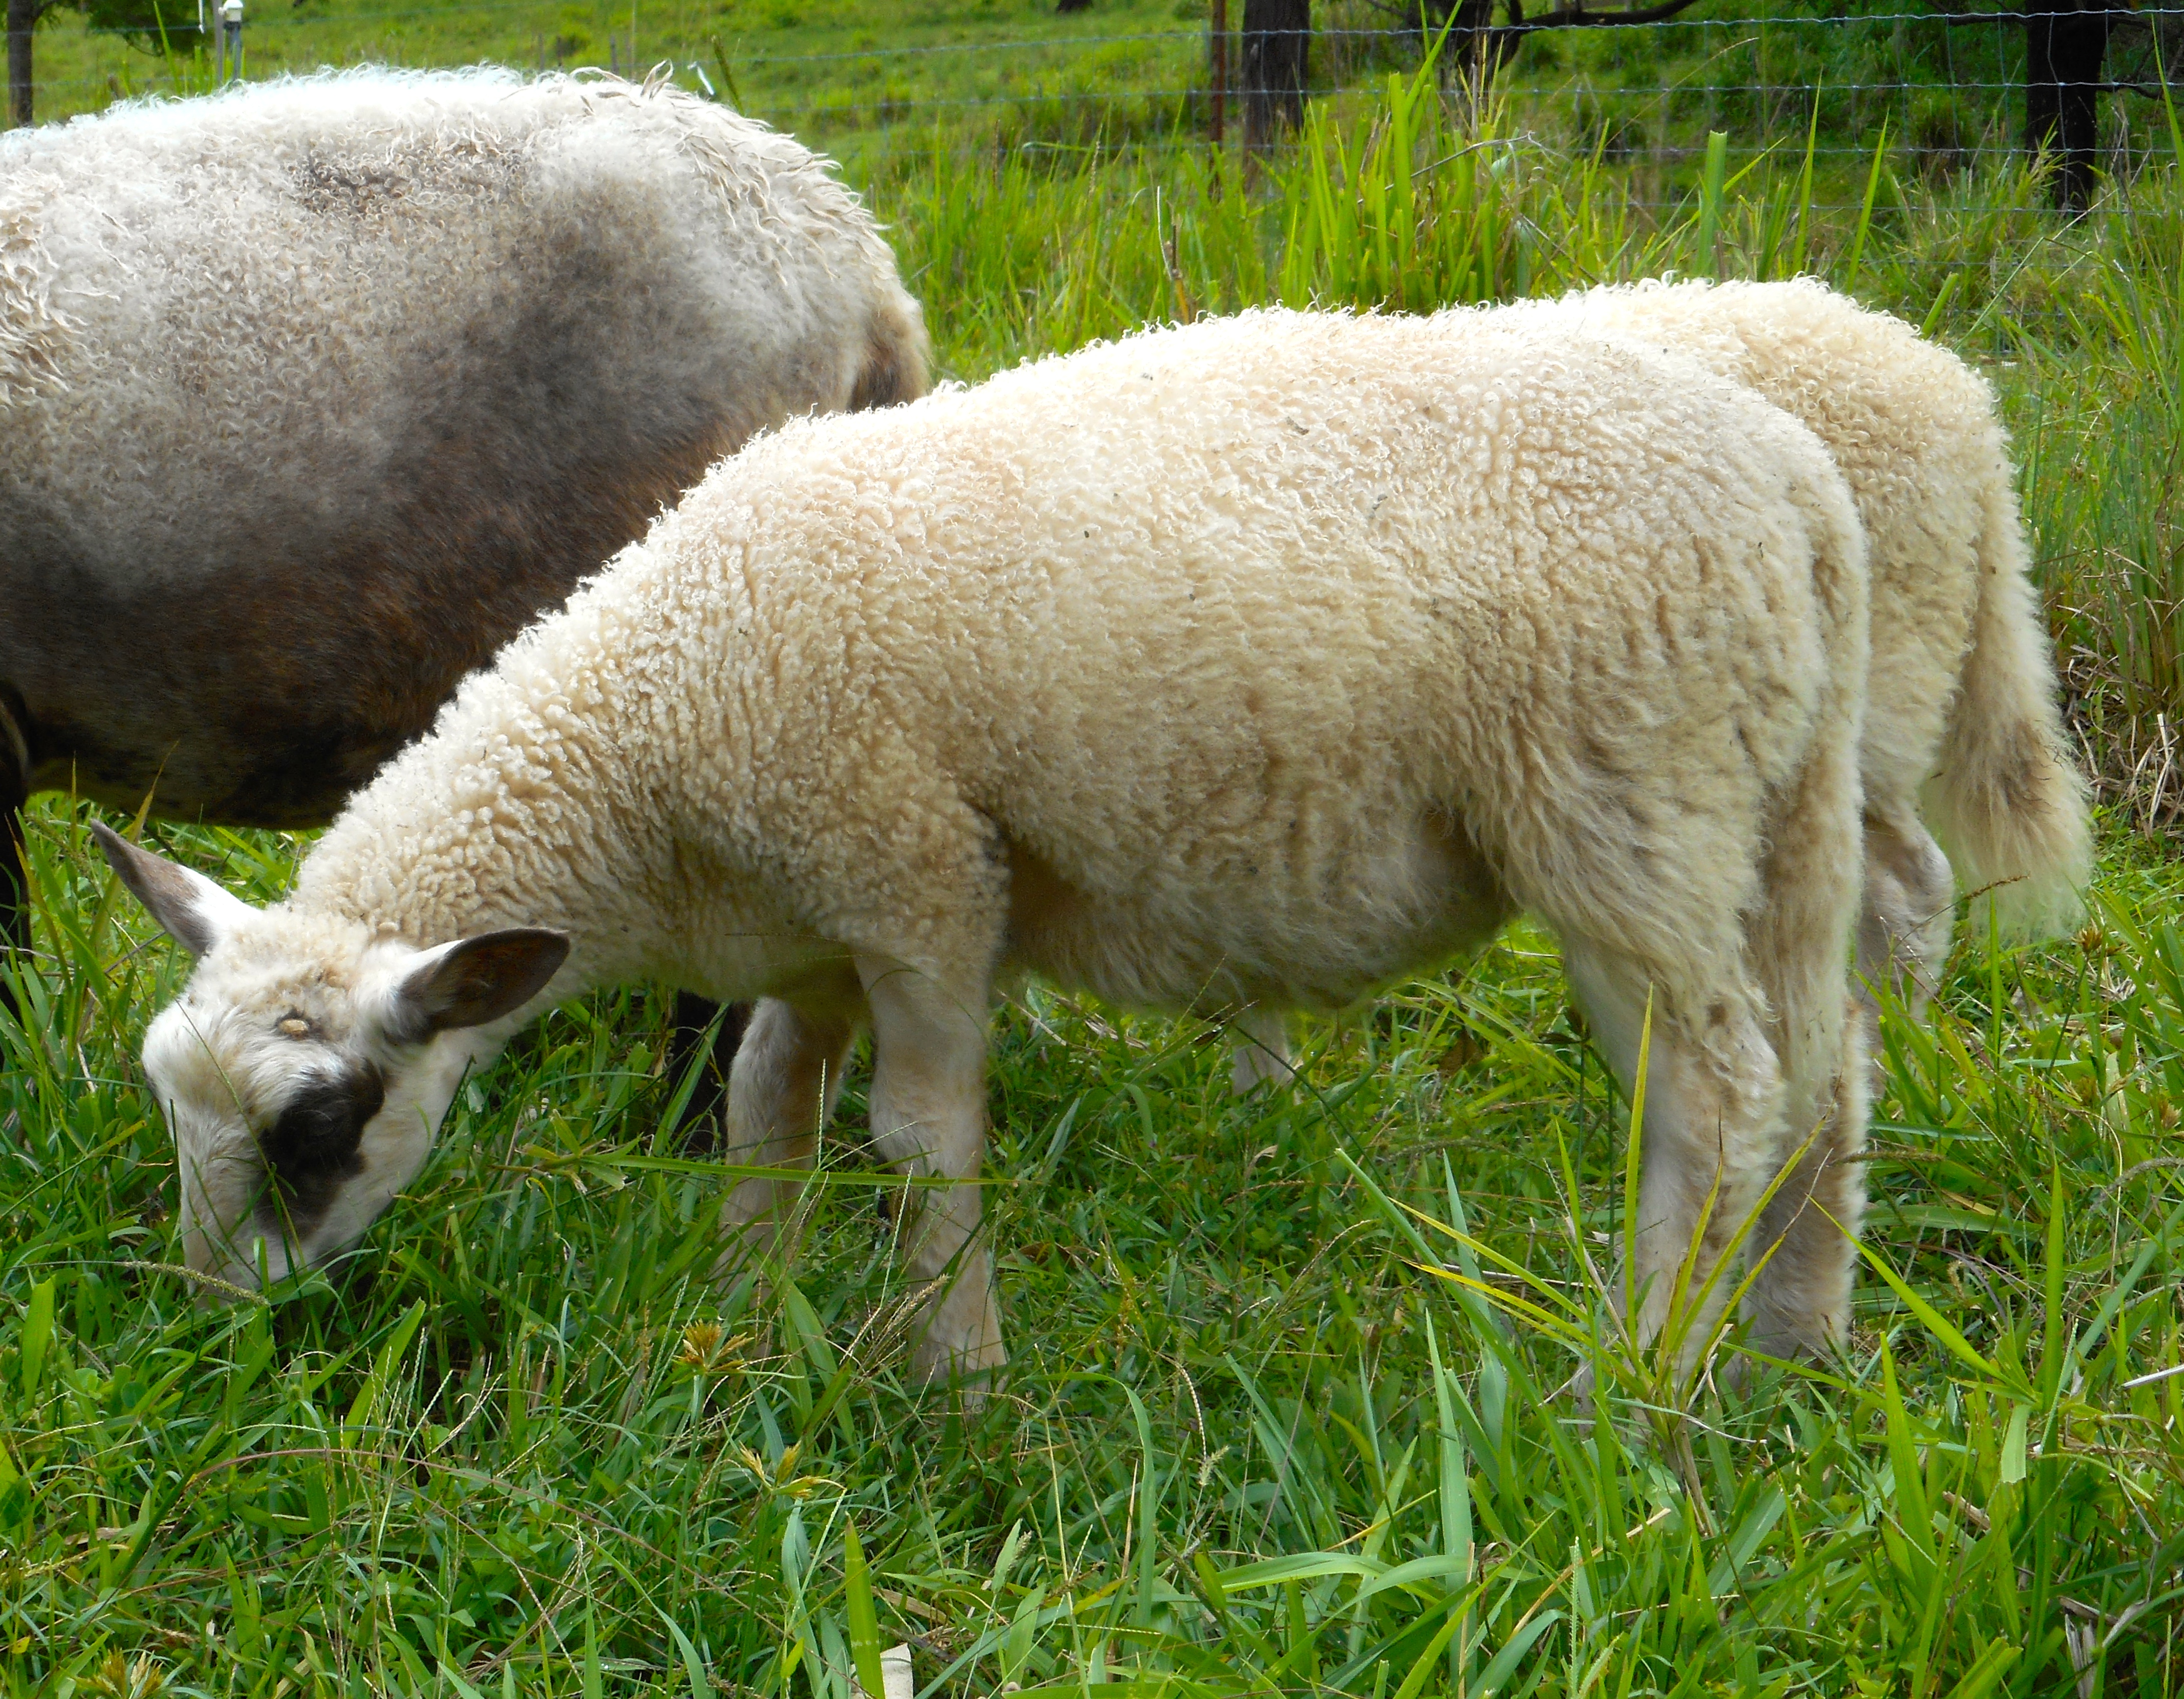 Chip's ram lamb